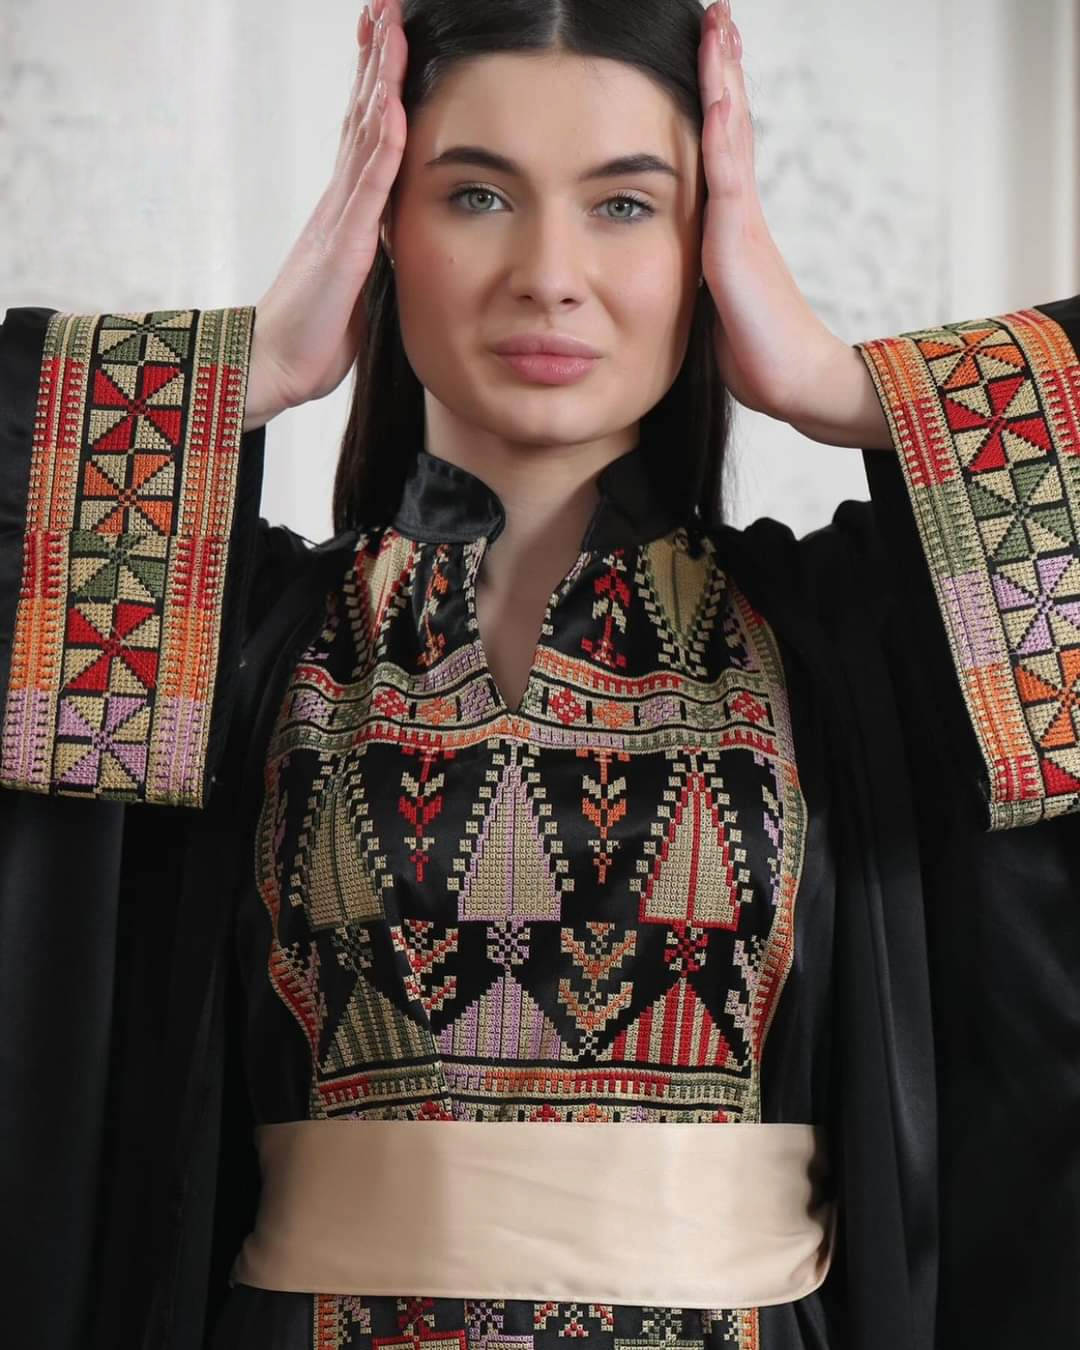 Black Satin Princess - 2 Piece High Quality Traditional Embroidered Satin Palestinian Style Thobe/Dress